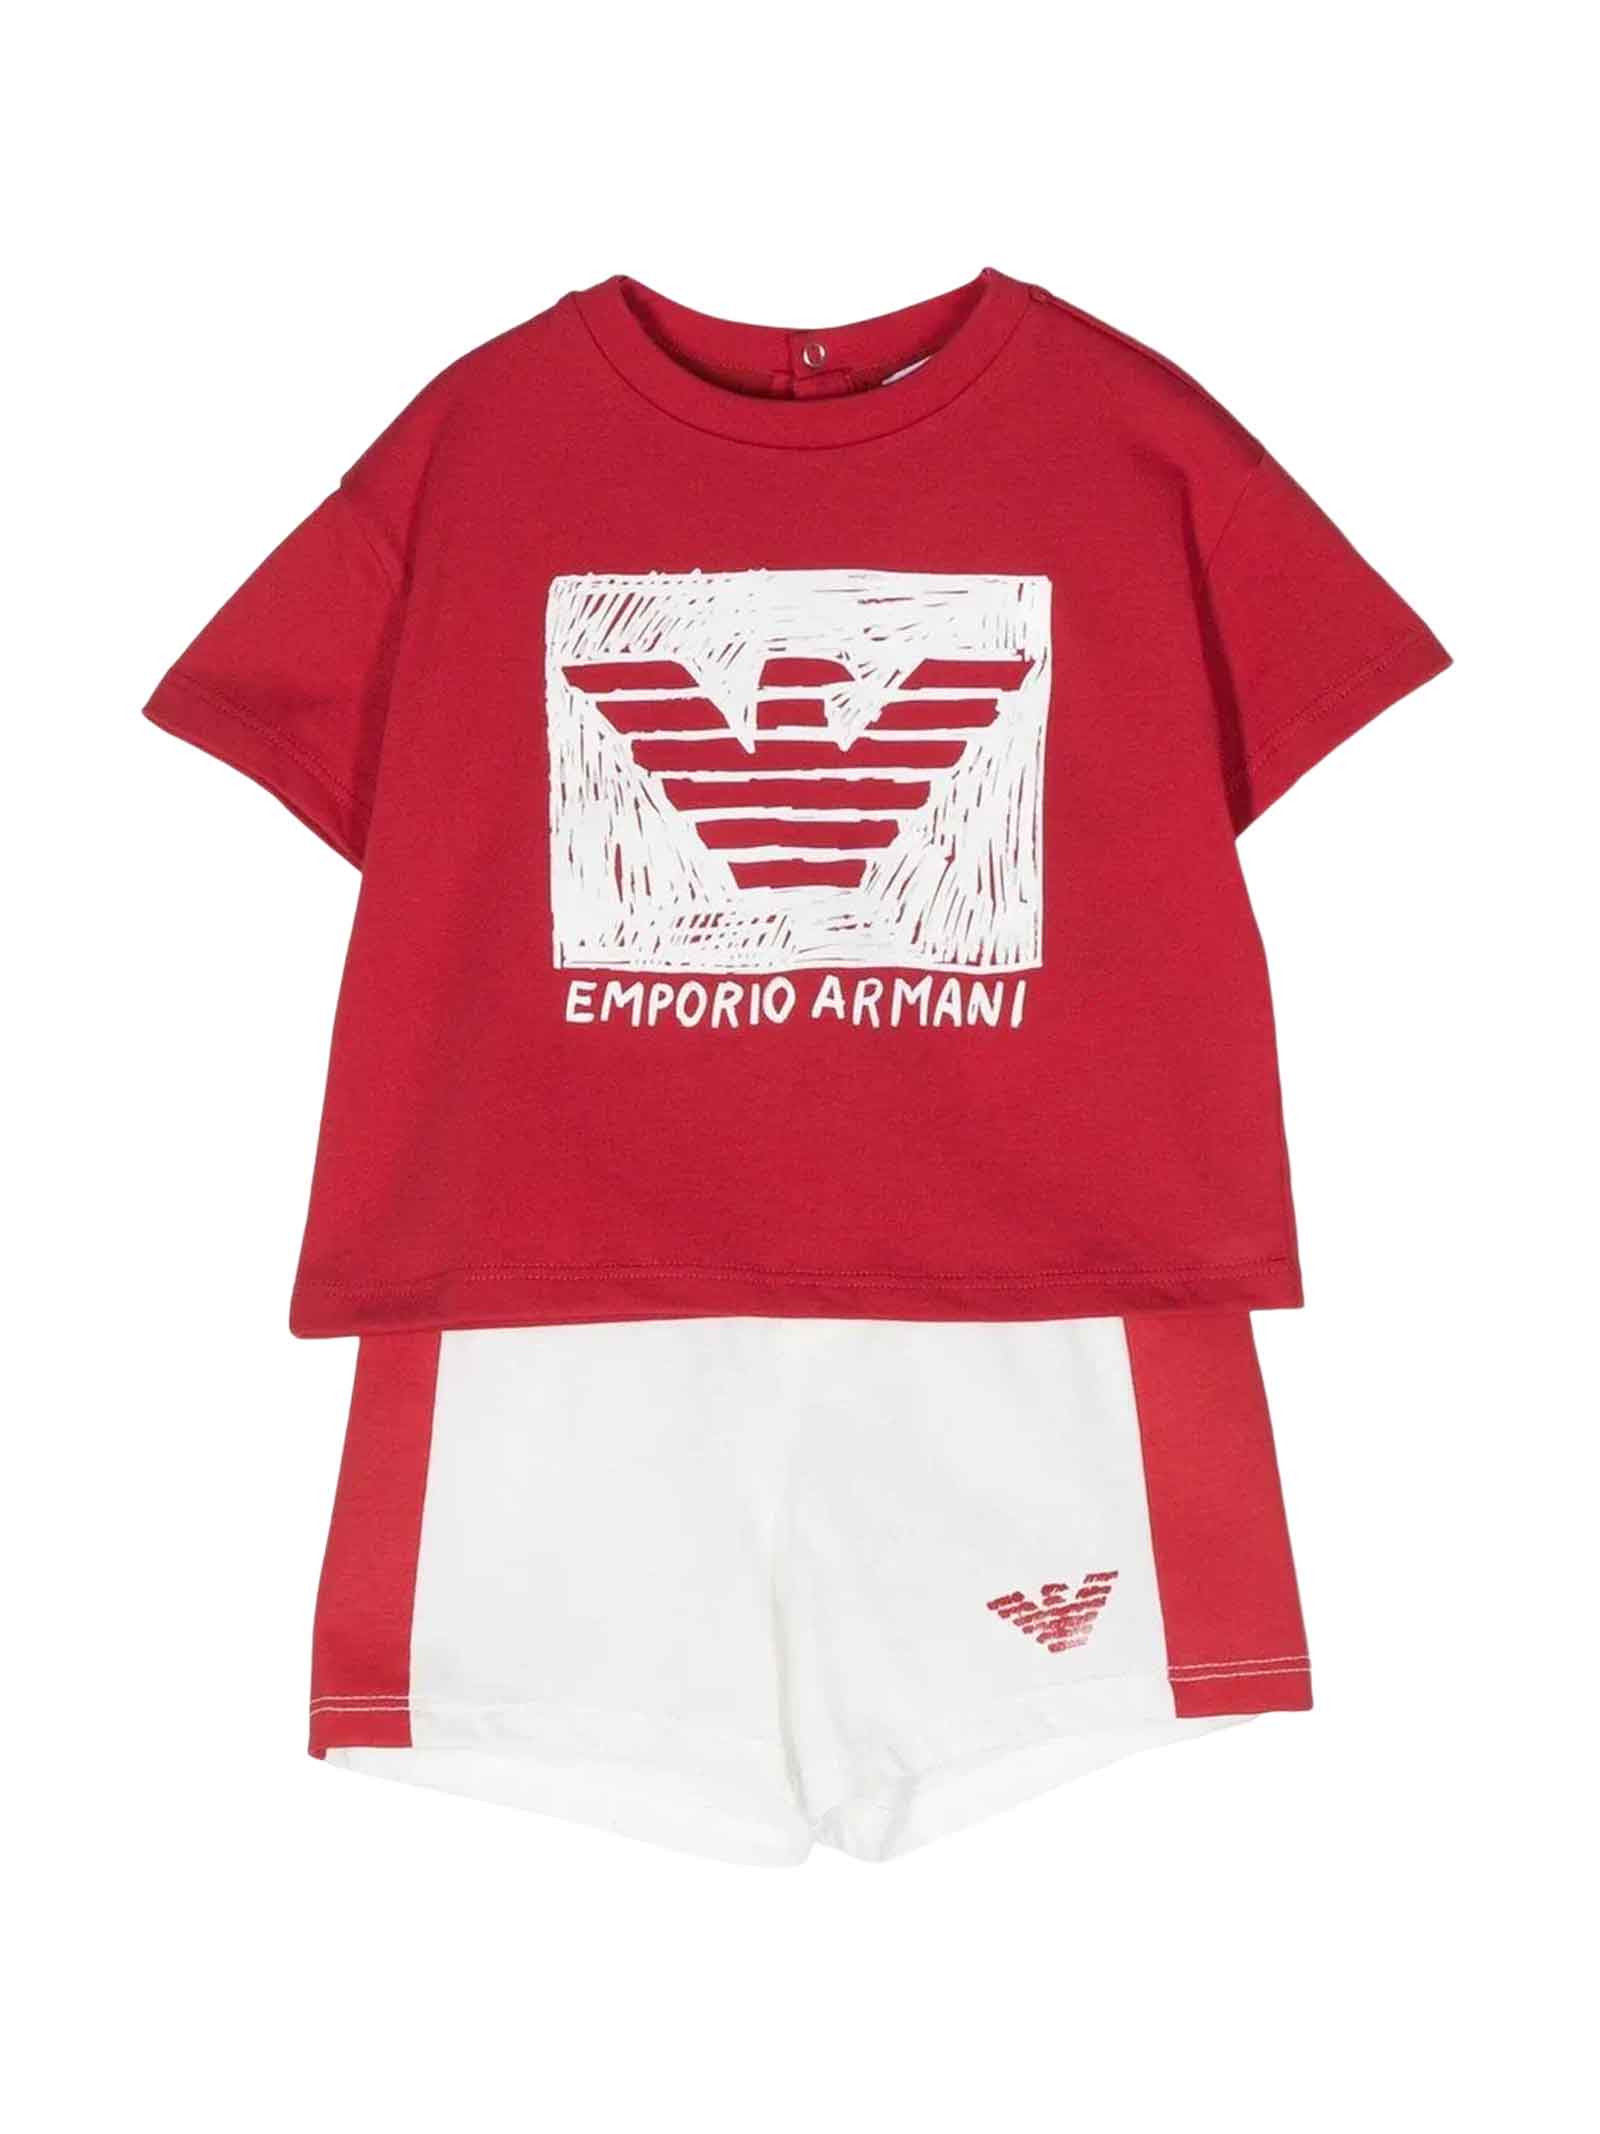 EMPORIO ARMANI WHITE/RED SUIT BABY BOY